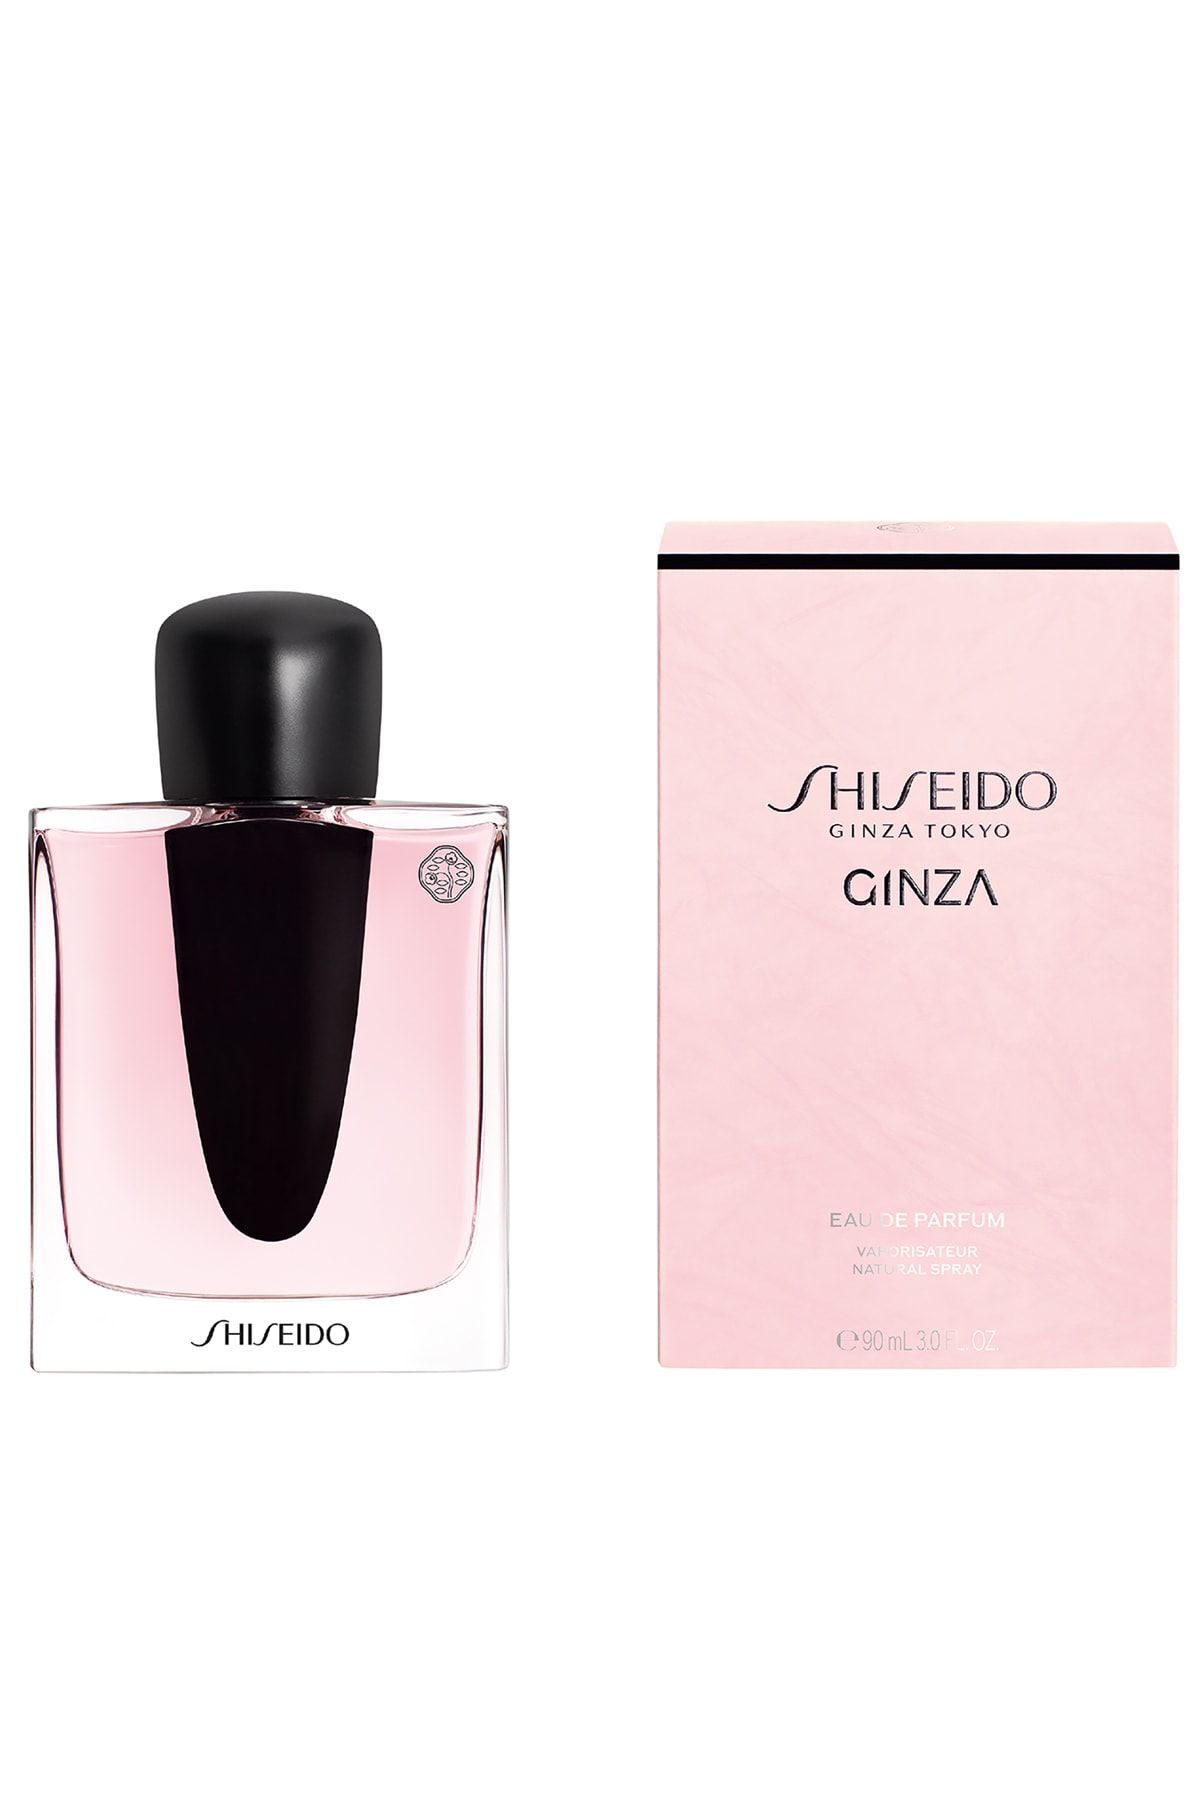 Ginza murasaki shiseido. Shiseido Ginza 30 ml. Духи шисейдо Гинза Токио. Ginza Tokyo духи. Ginza Shiseido модель.